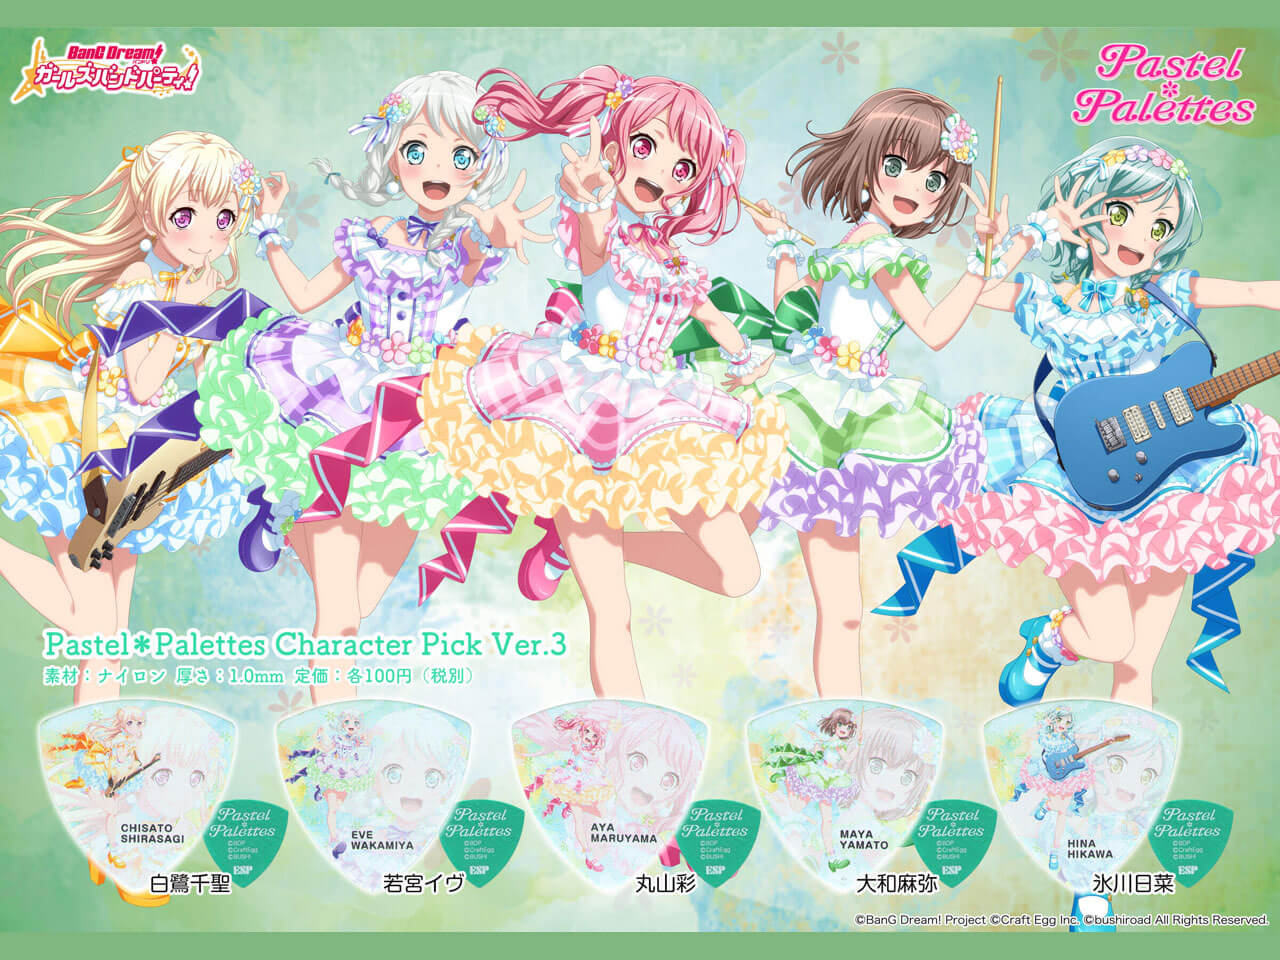 【ESP×BanG Dream!コラボピック】Pastel*Palettes Character Pick Ver.3 "大和麻弥"10枚セット（GBP MAYA PASTEL PALETTES 3）